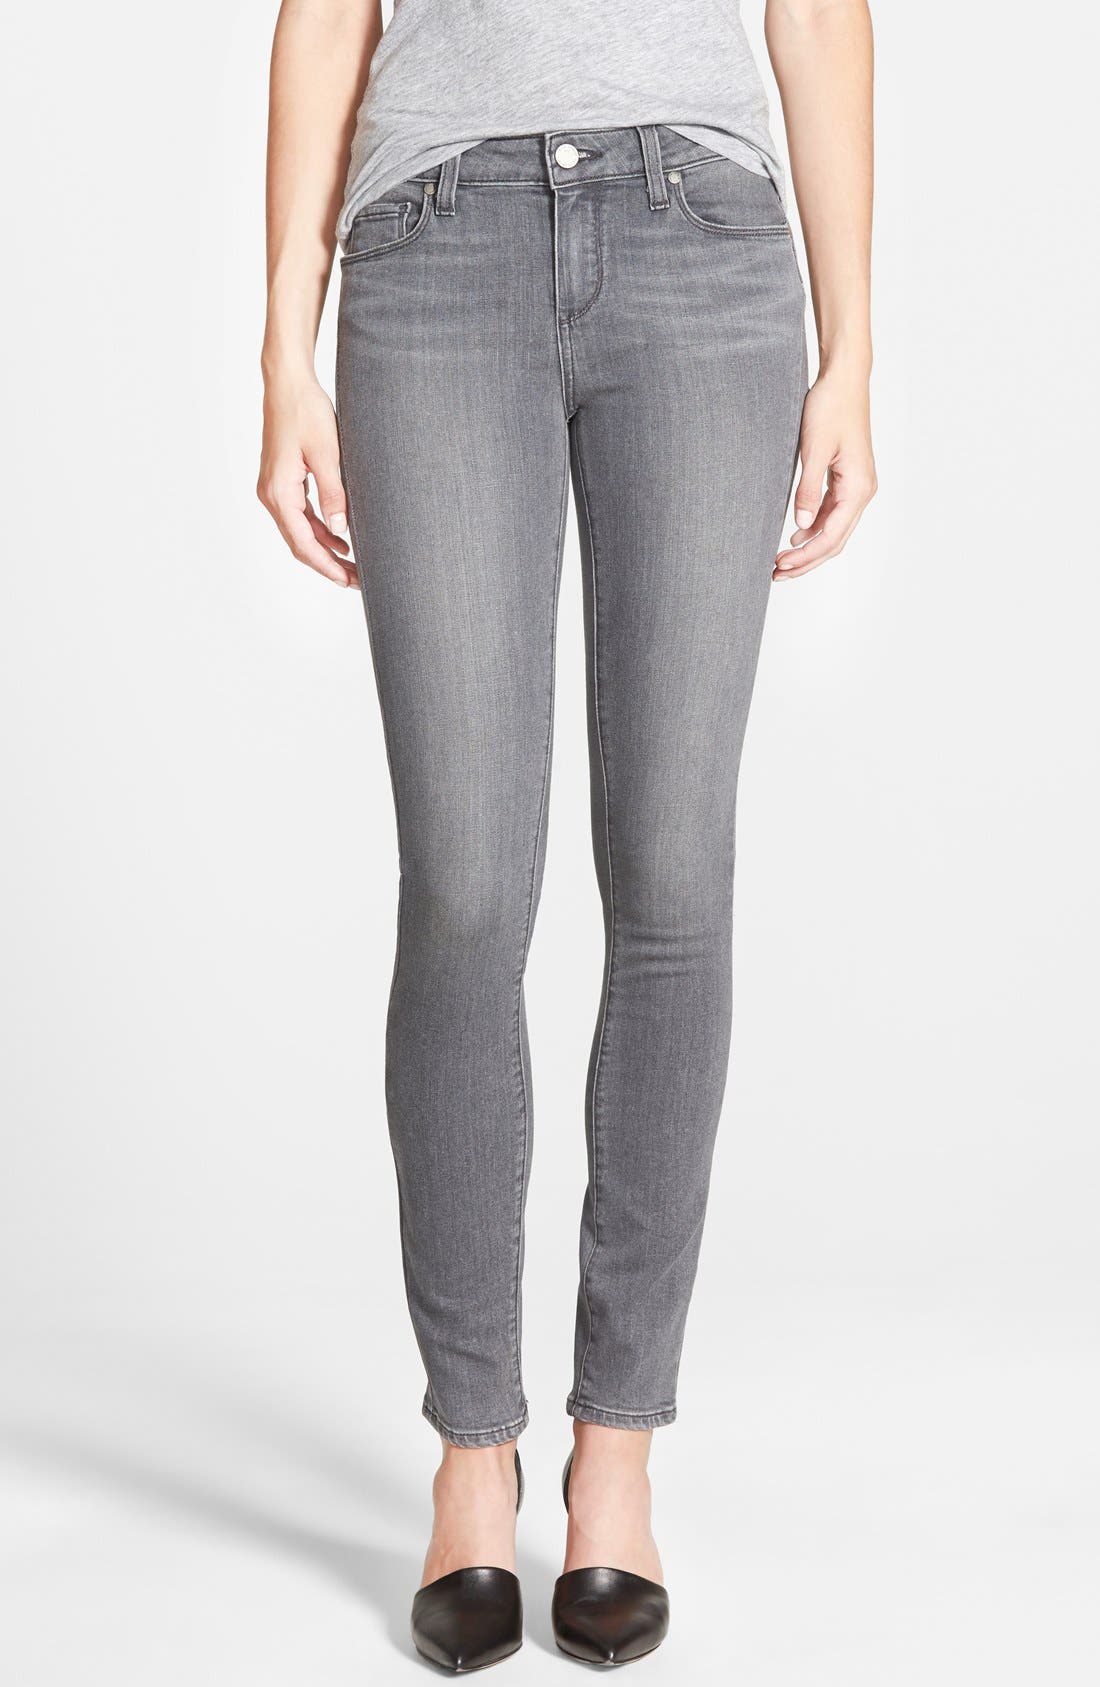 grey denim skinny jeans